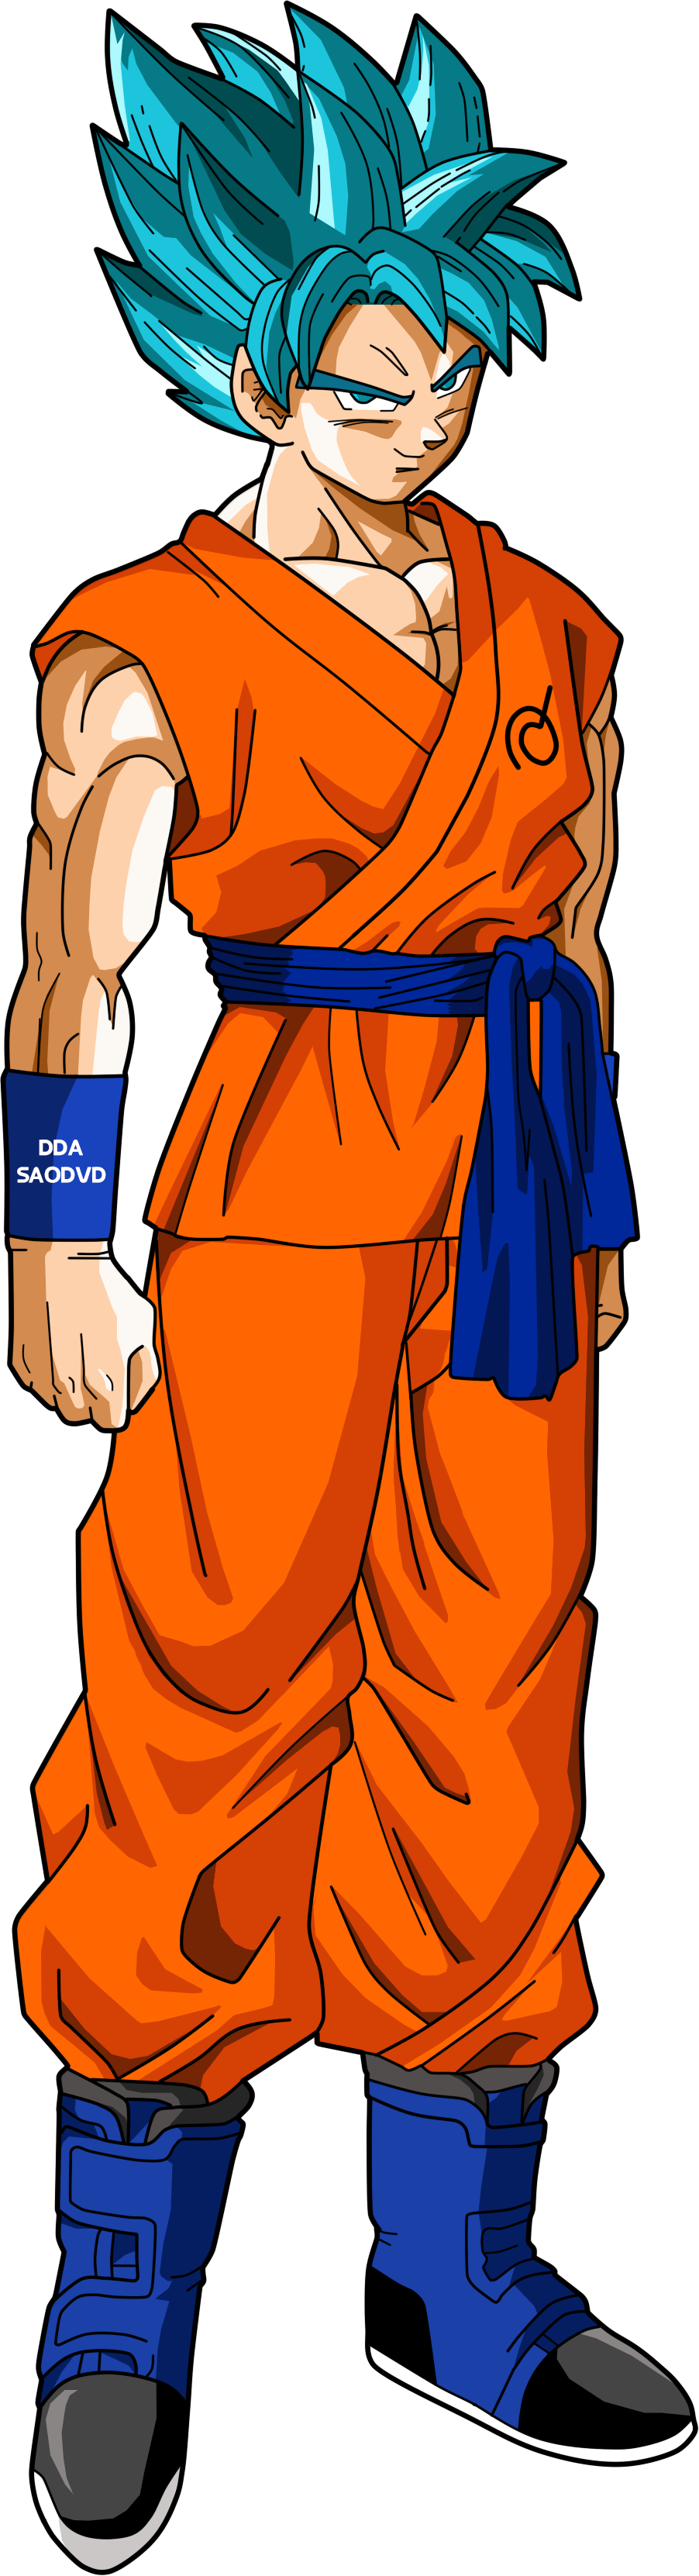 Goku Ssjdss By Saodvd